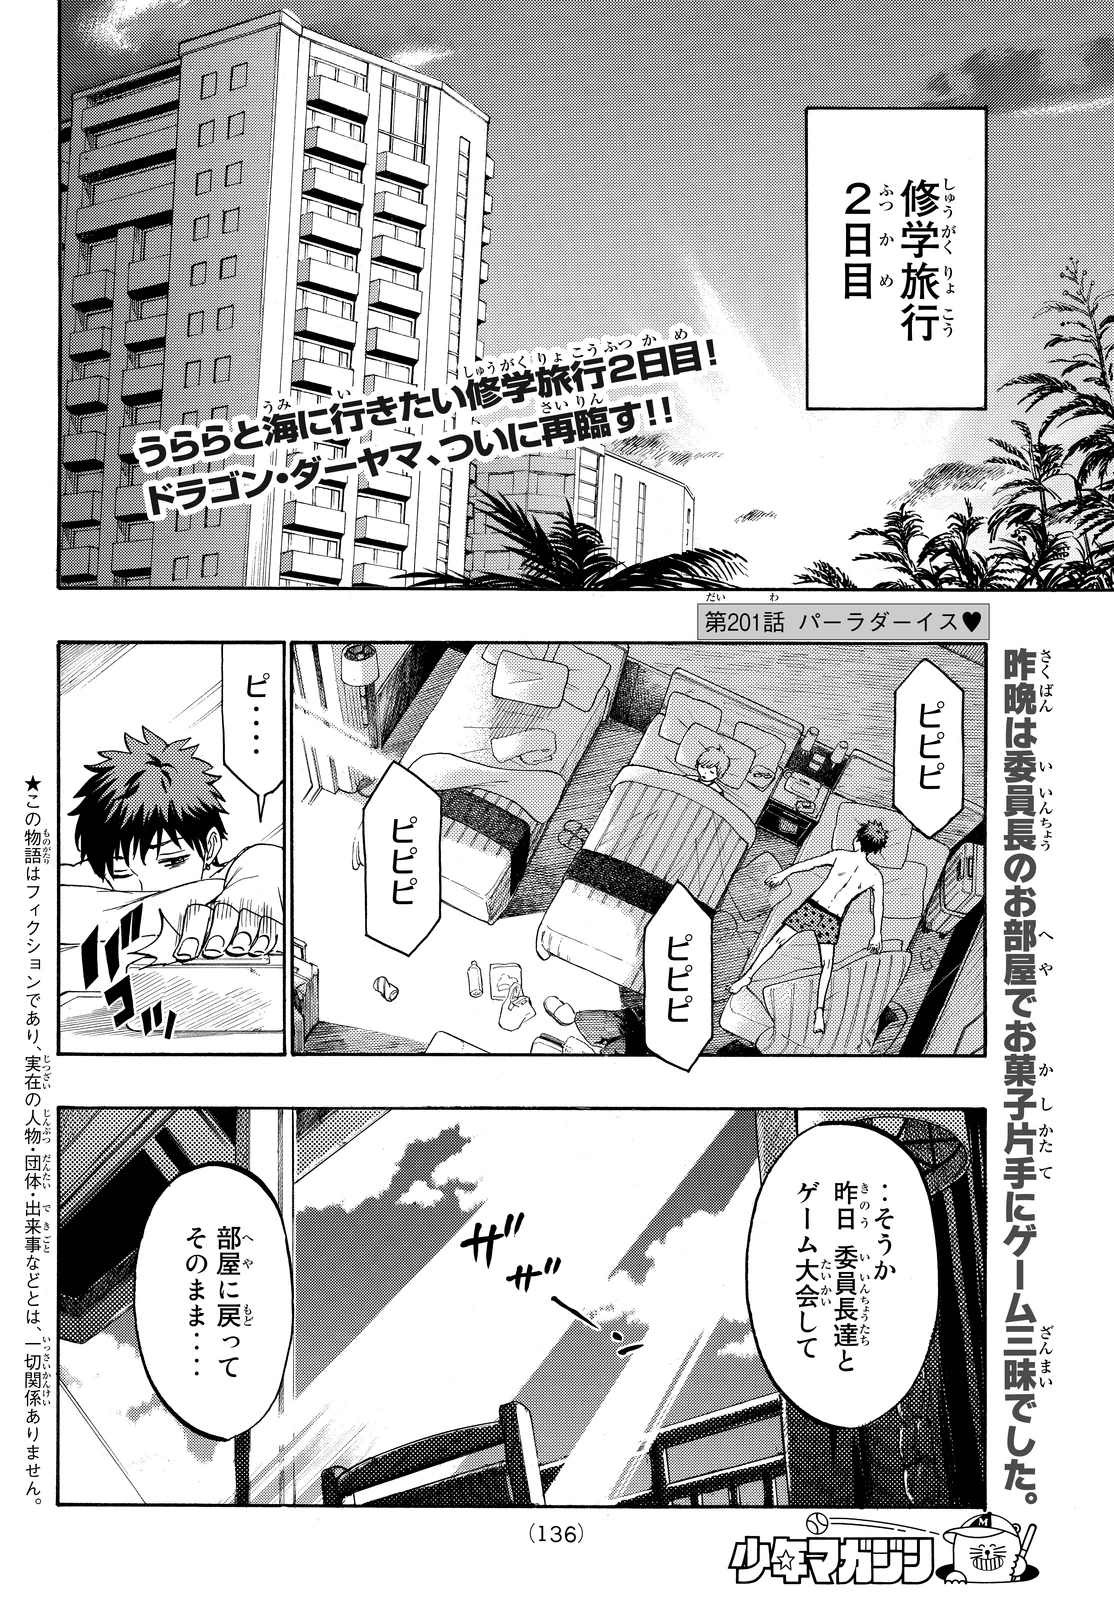 Yamada-kun to 7-nin no Majo - Chapter 201 - Page 2